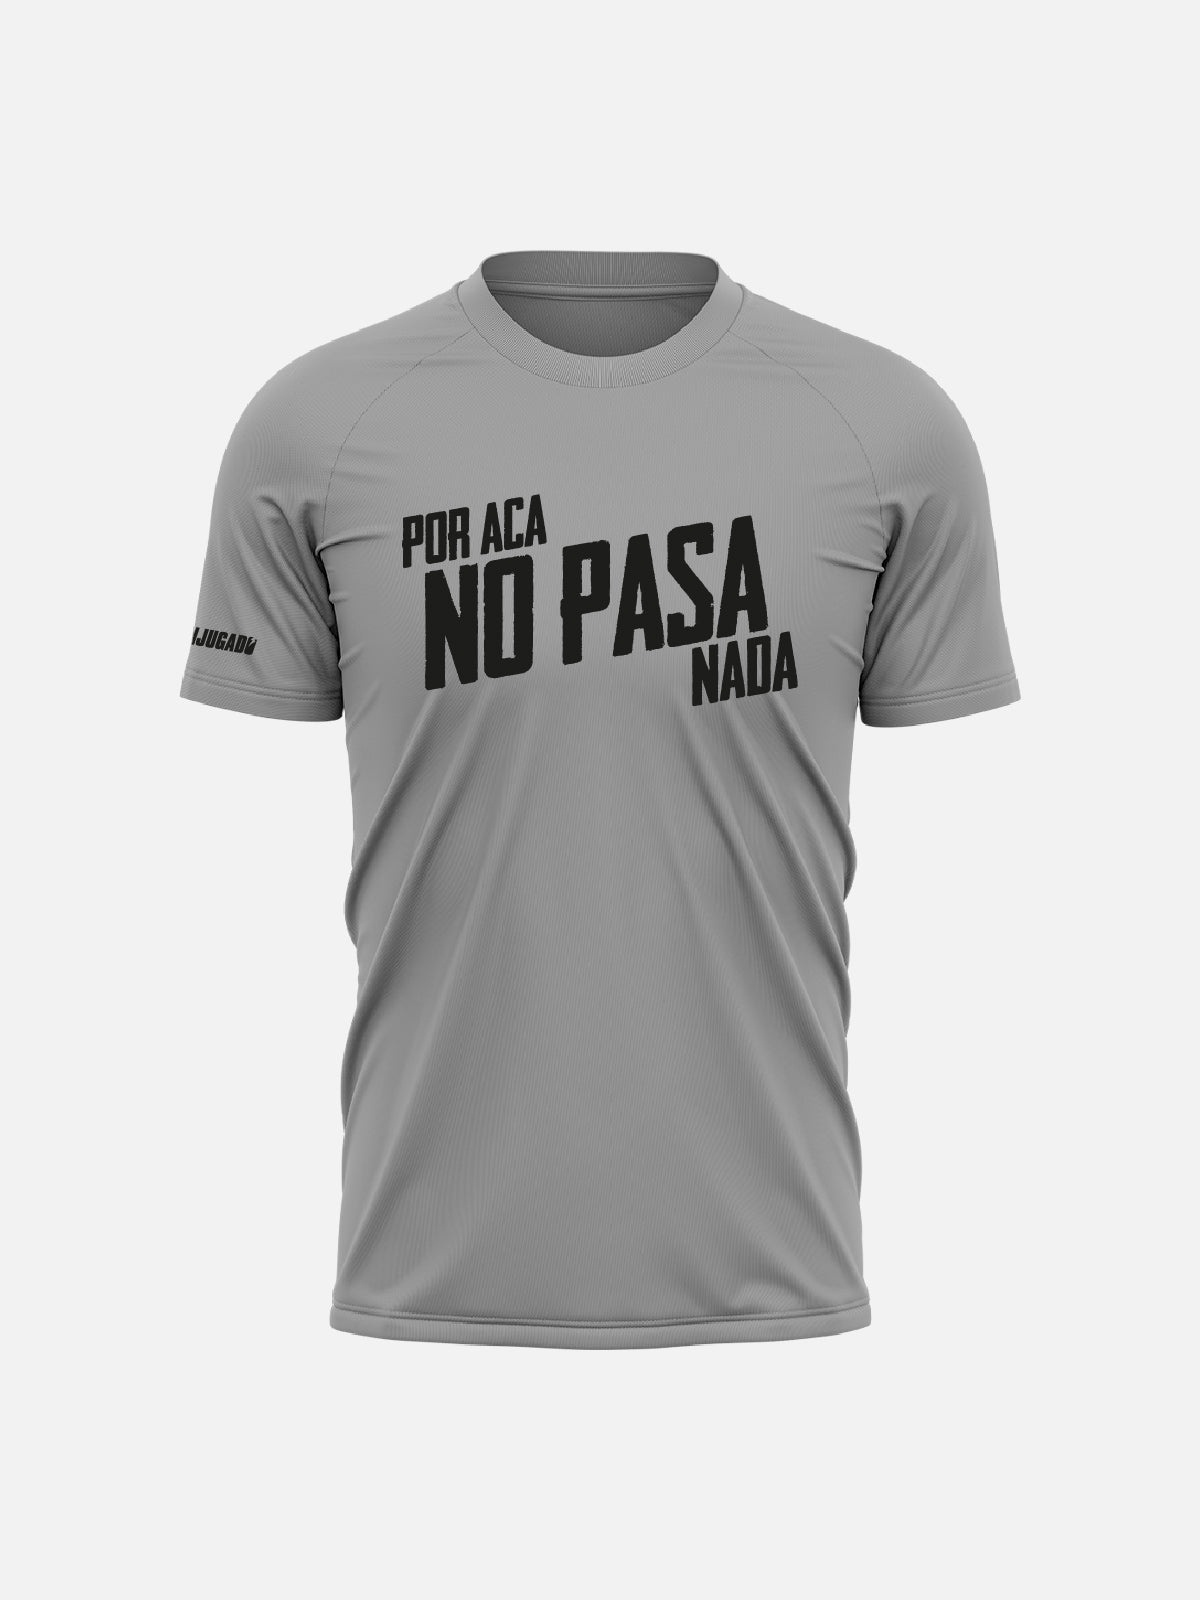 Fun Quick Dry T-Shirt - Por Aca No Pasa Nada